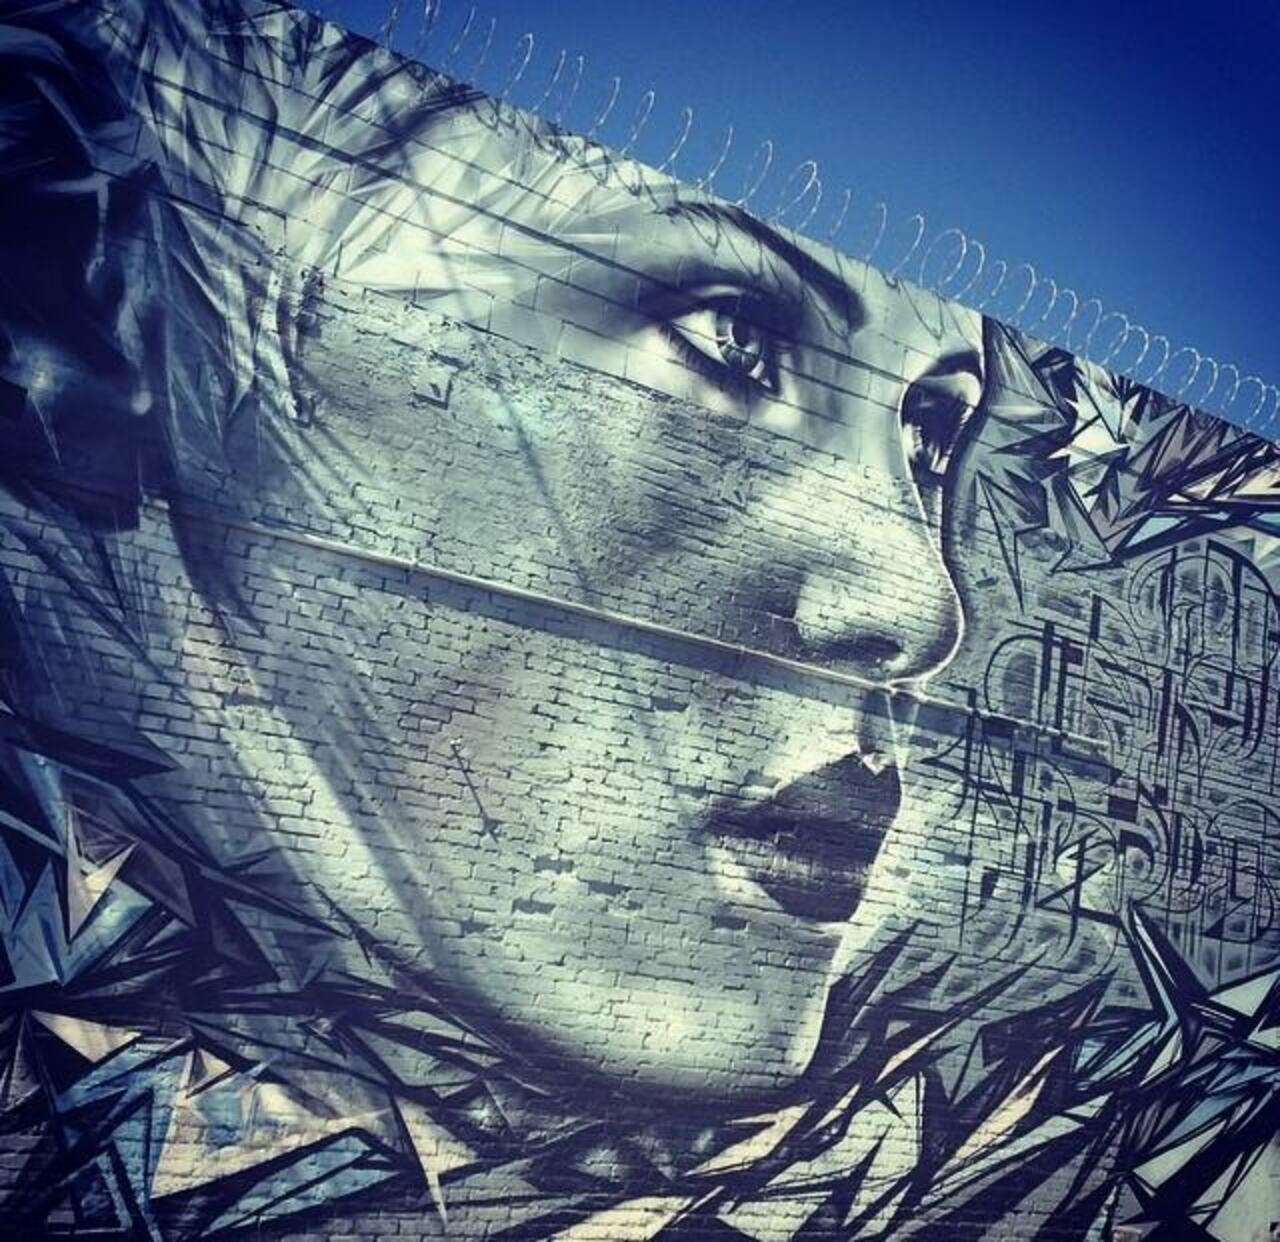 RT @designopinion: Artist @StarFighterA fabulous new Street Art mural located in Los Angeles. #art #mural #graffiti #streetart http://t.co/ILxiuL8U84